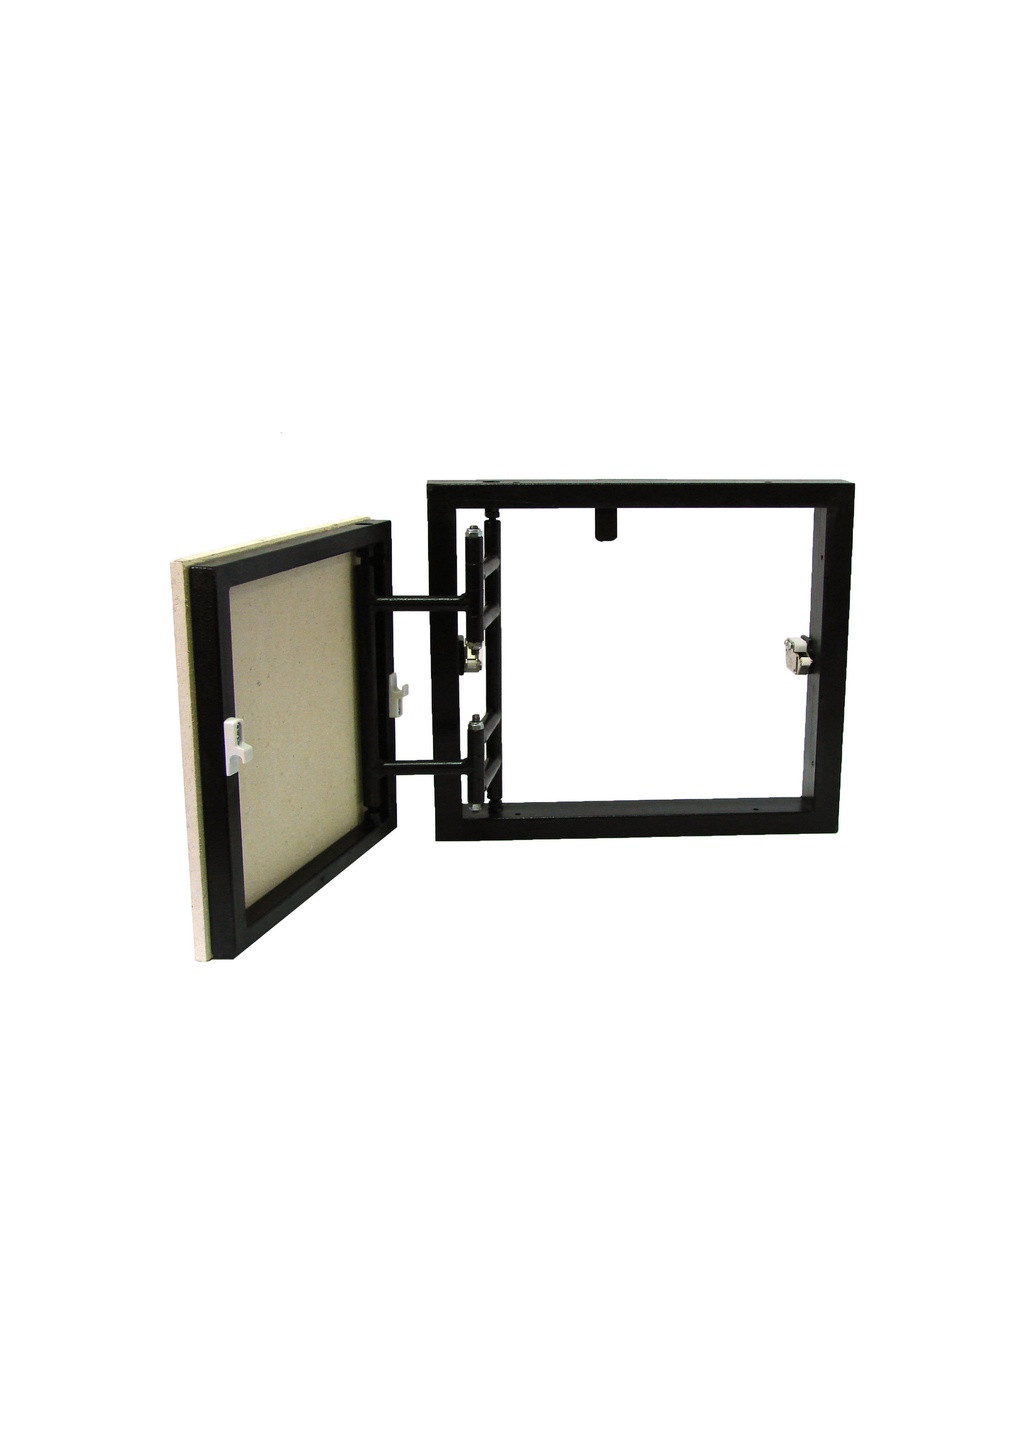 Ревизионный люк скрытого монтажа под плитку нажимного типа 350x300 ревизионная дверца для плитки (1137) S-Dom (264208716)